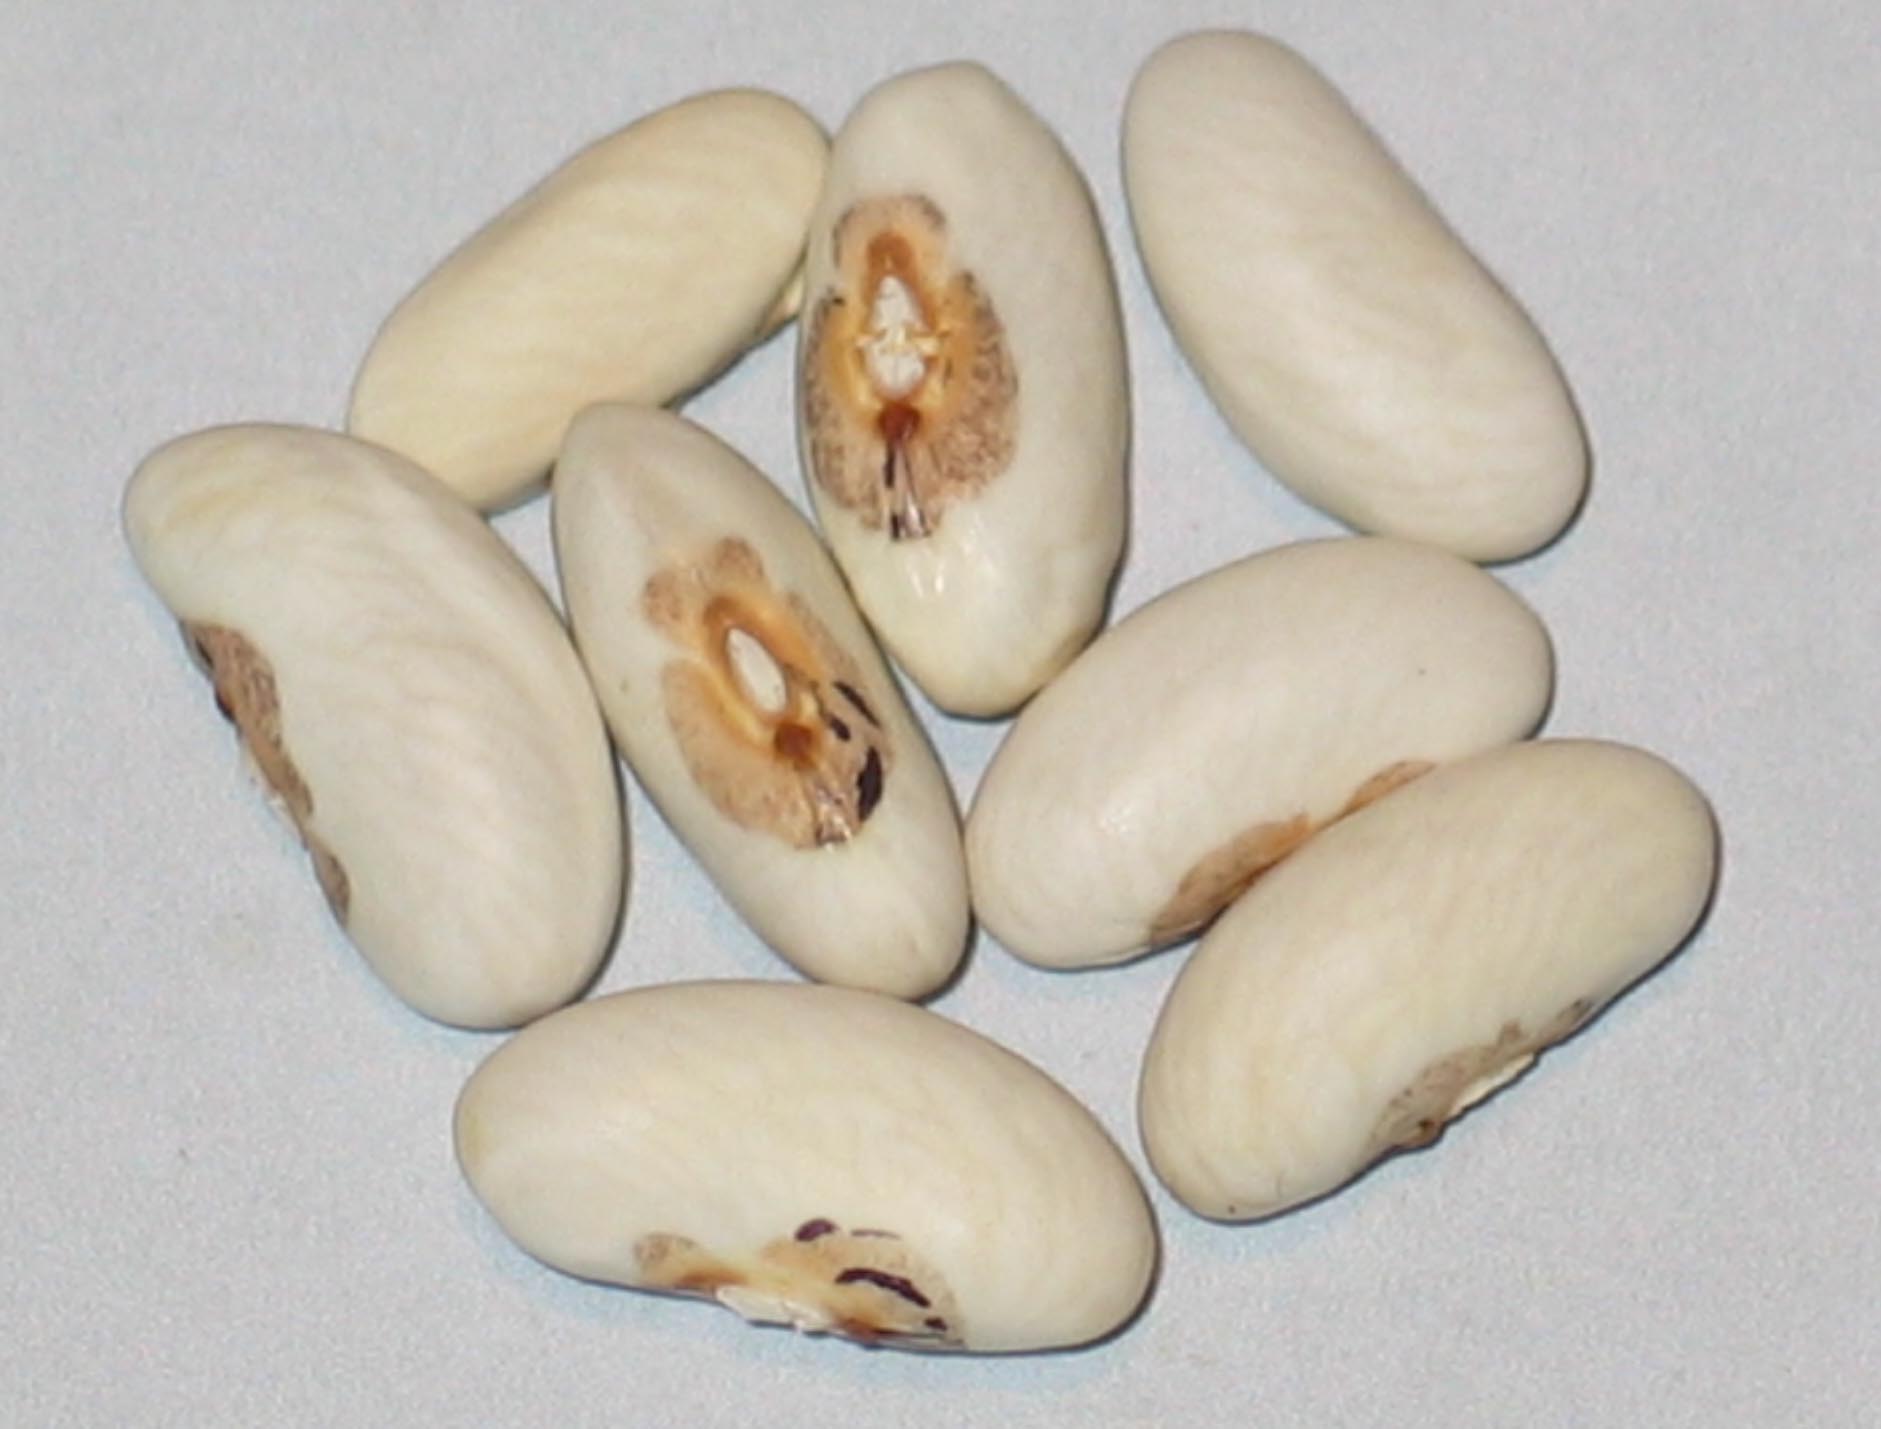 image of Woodstock beans